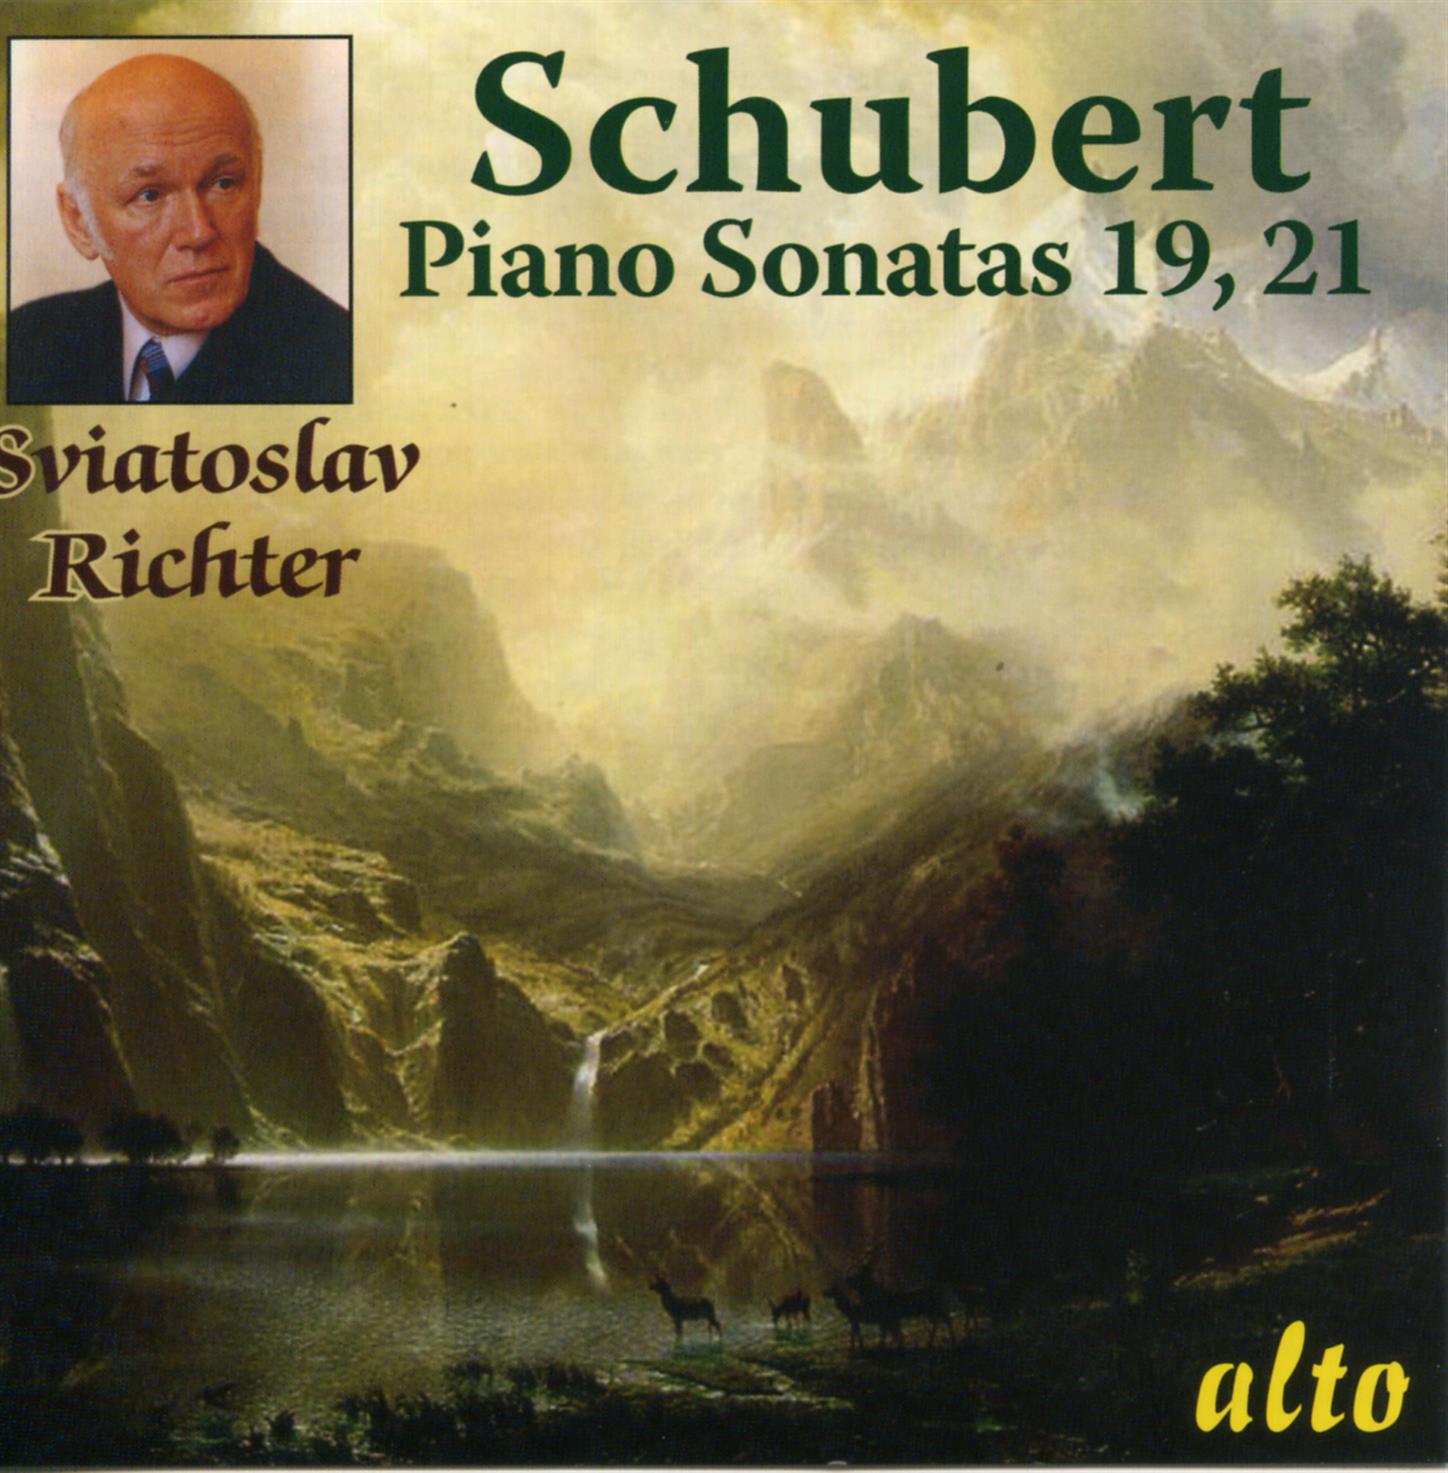 Sviatoslav Richter plays Schubert Sonatas 19 & 21